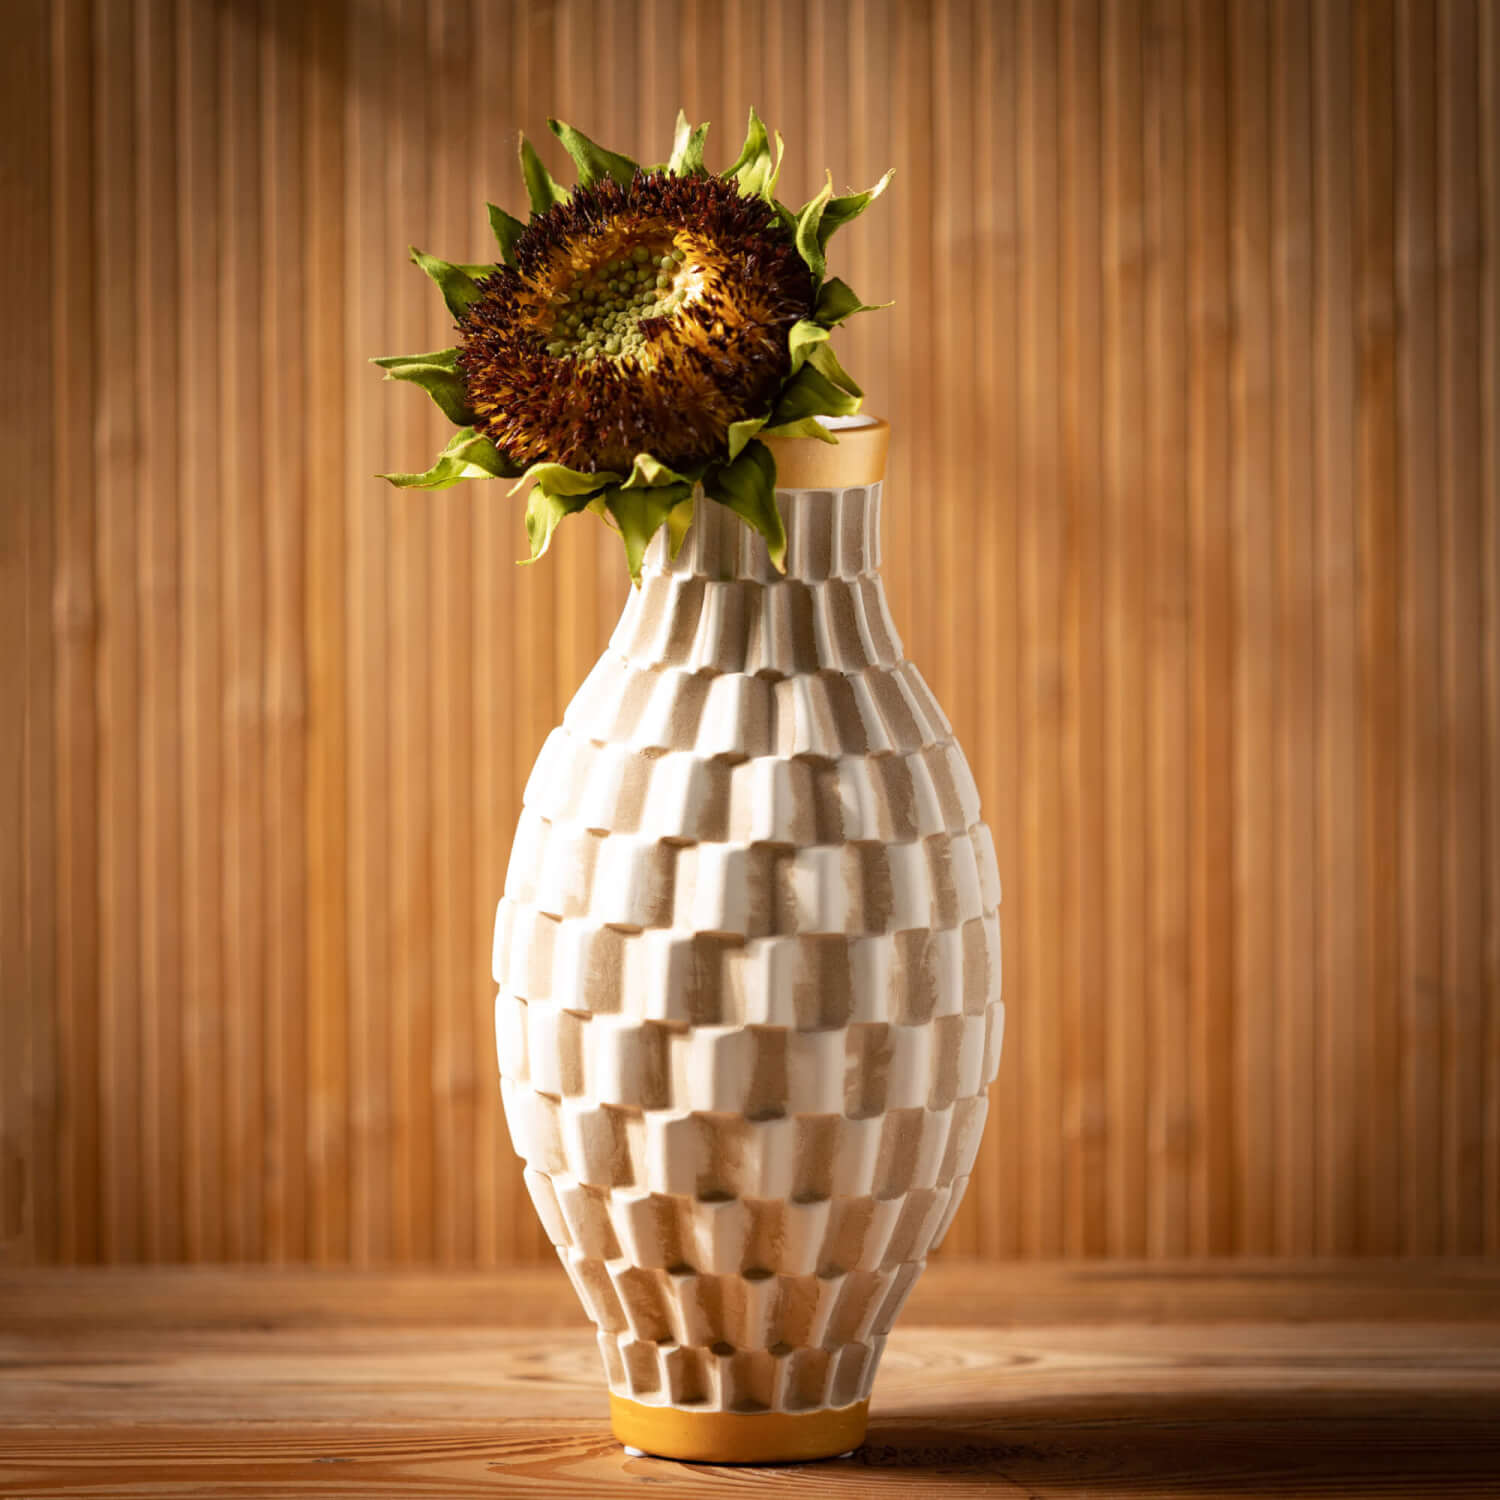 Gold Trimmed Geometric Vases Elevate Home Decor - Vases